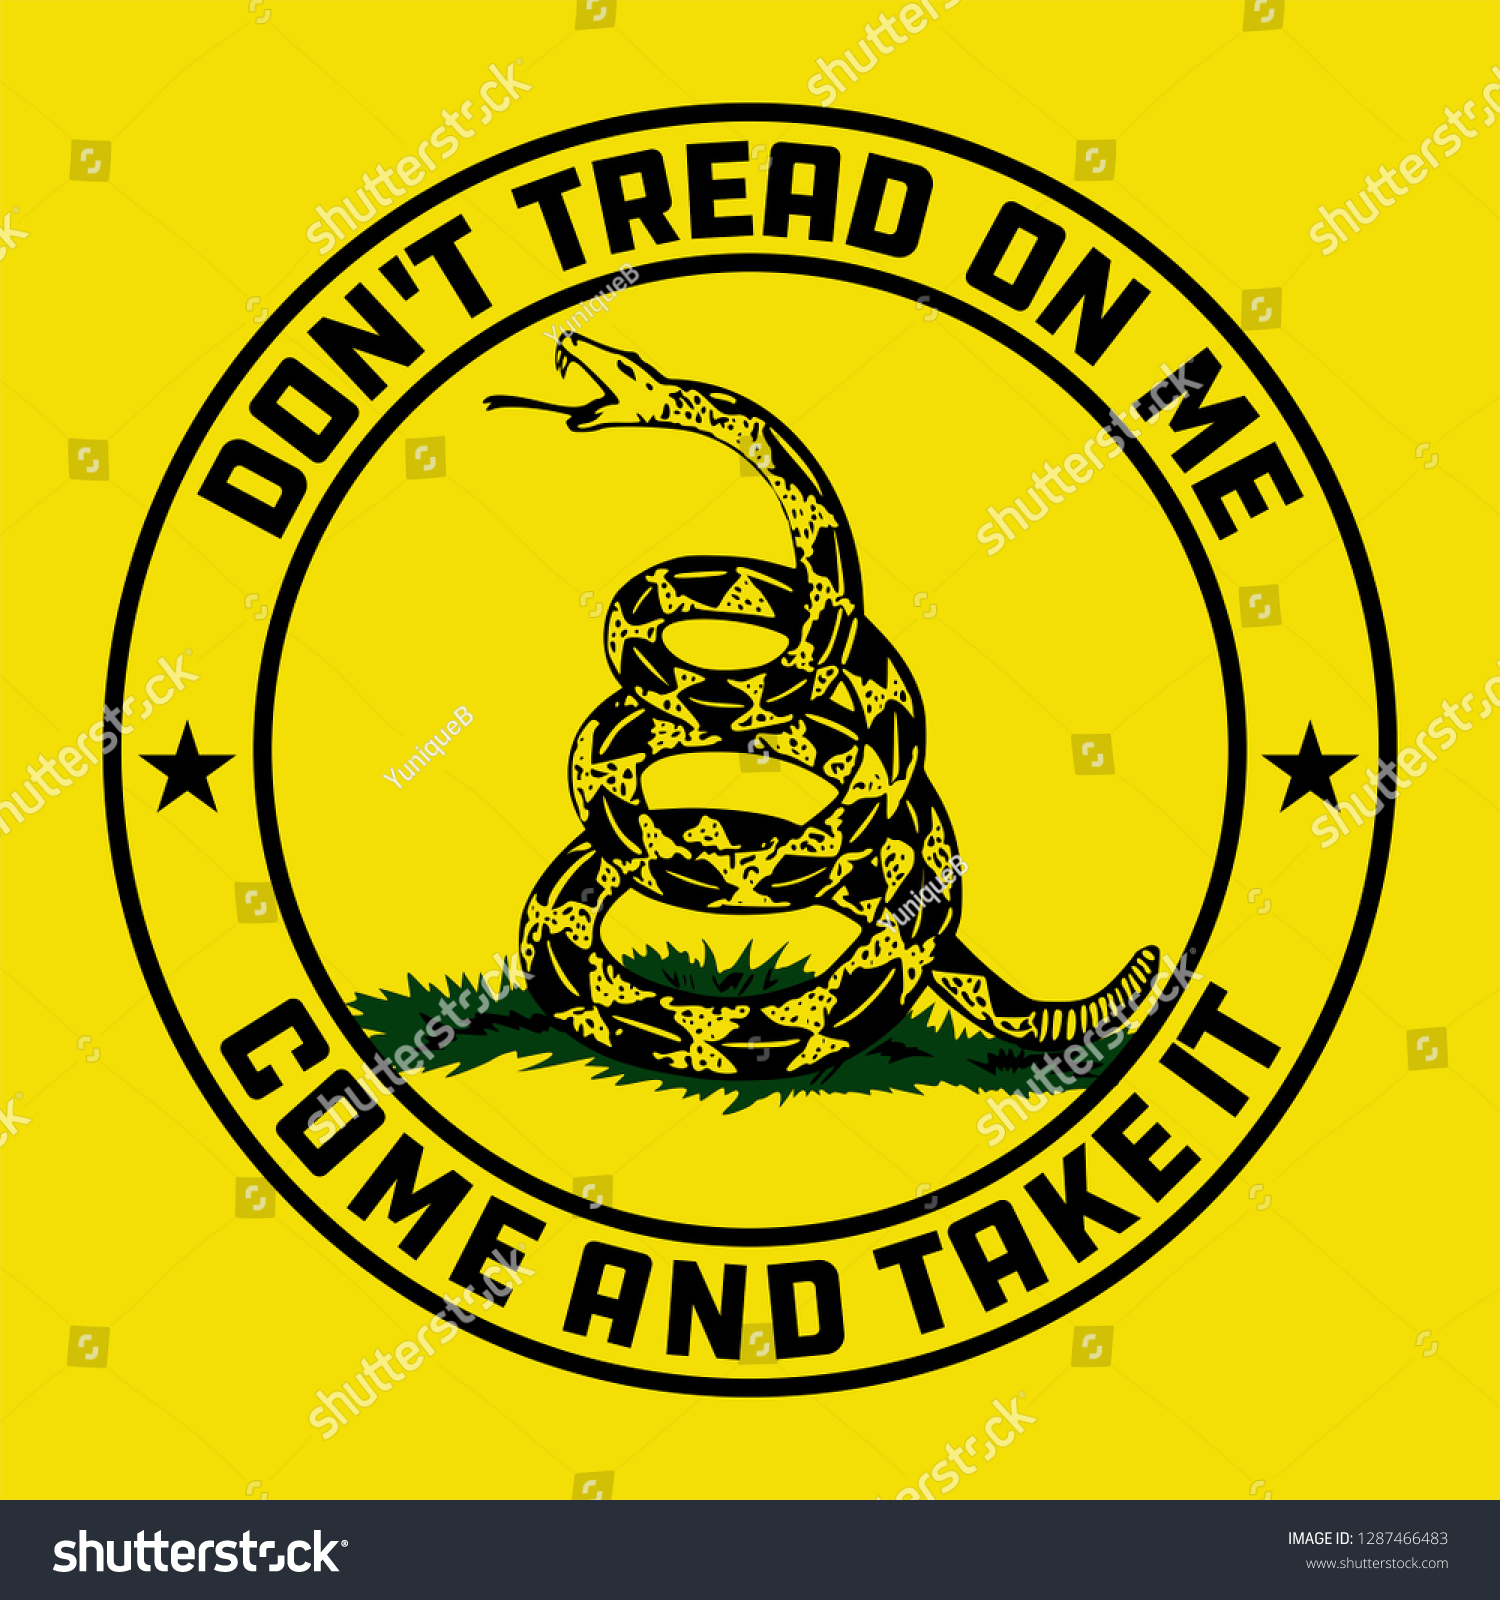 SVG of Don't Tread on Me Gadsden Flag emblem on yellow background svg